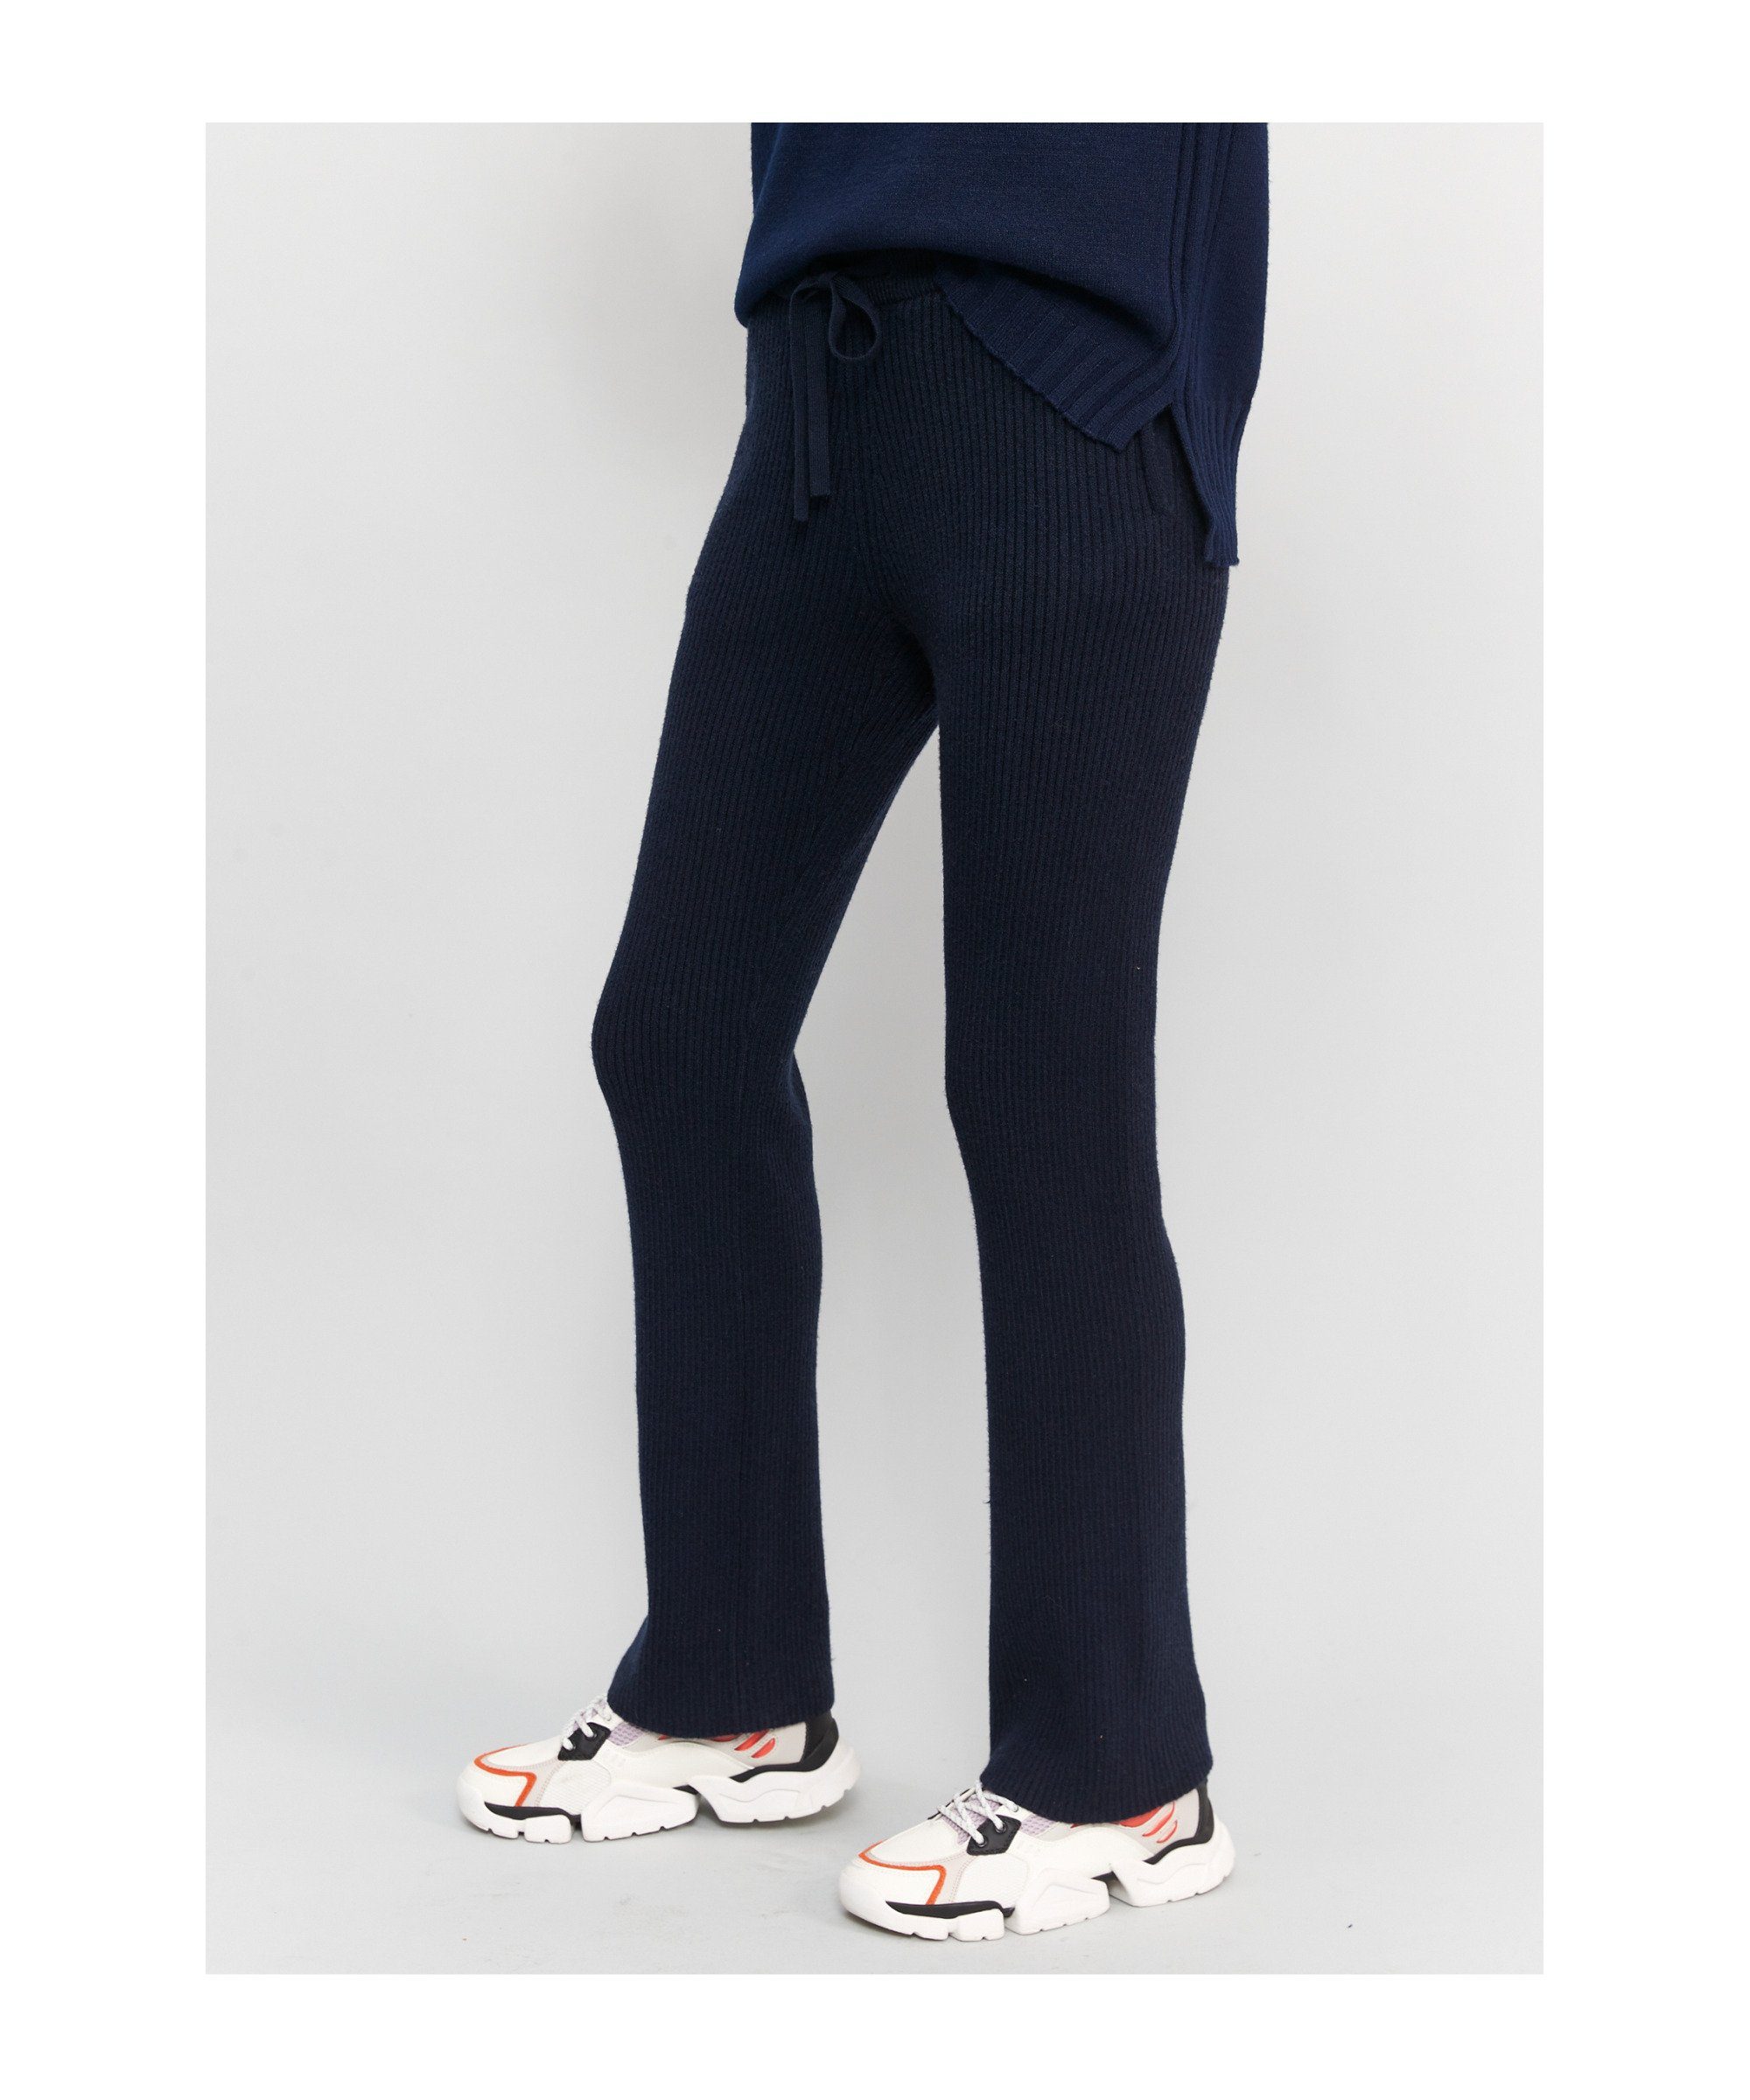 Damen Hosen LOOKS by Wolfgang Joop Jogger Pants Looks Original Cutting Hose Damen